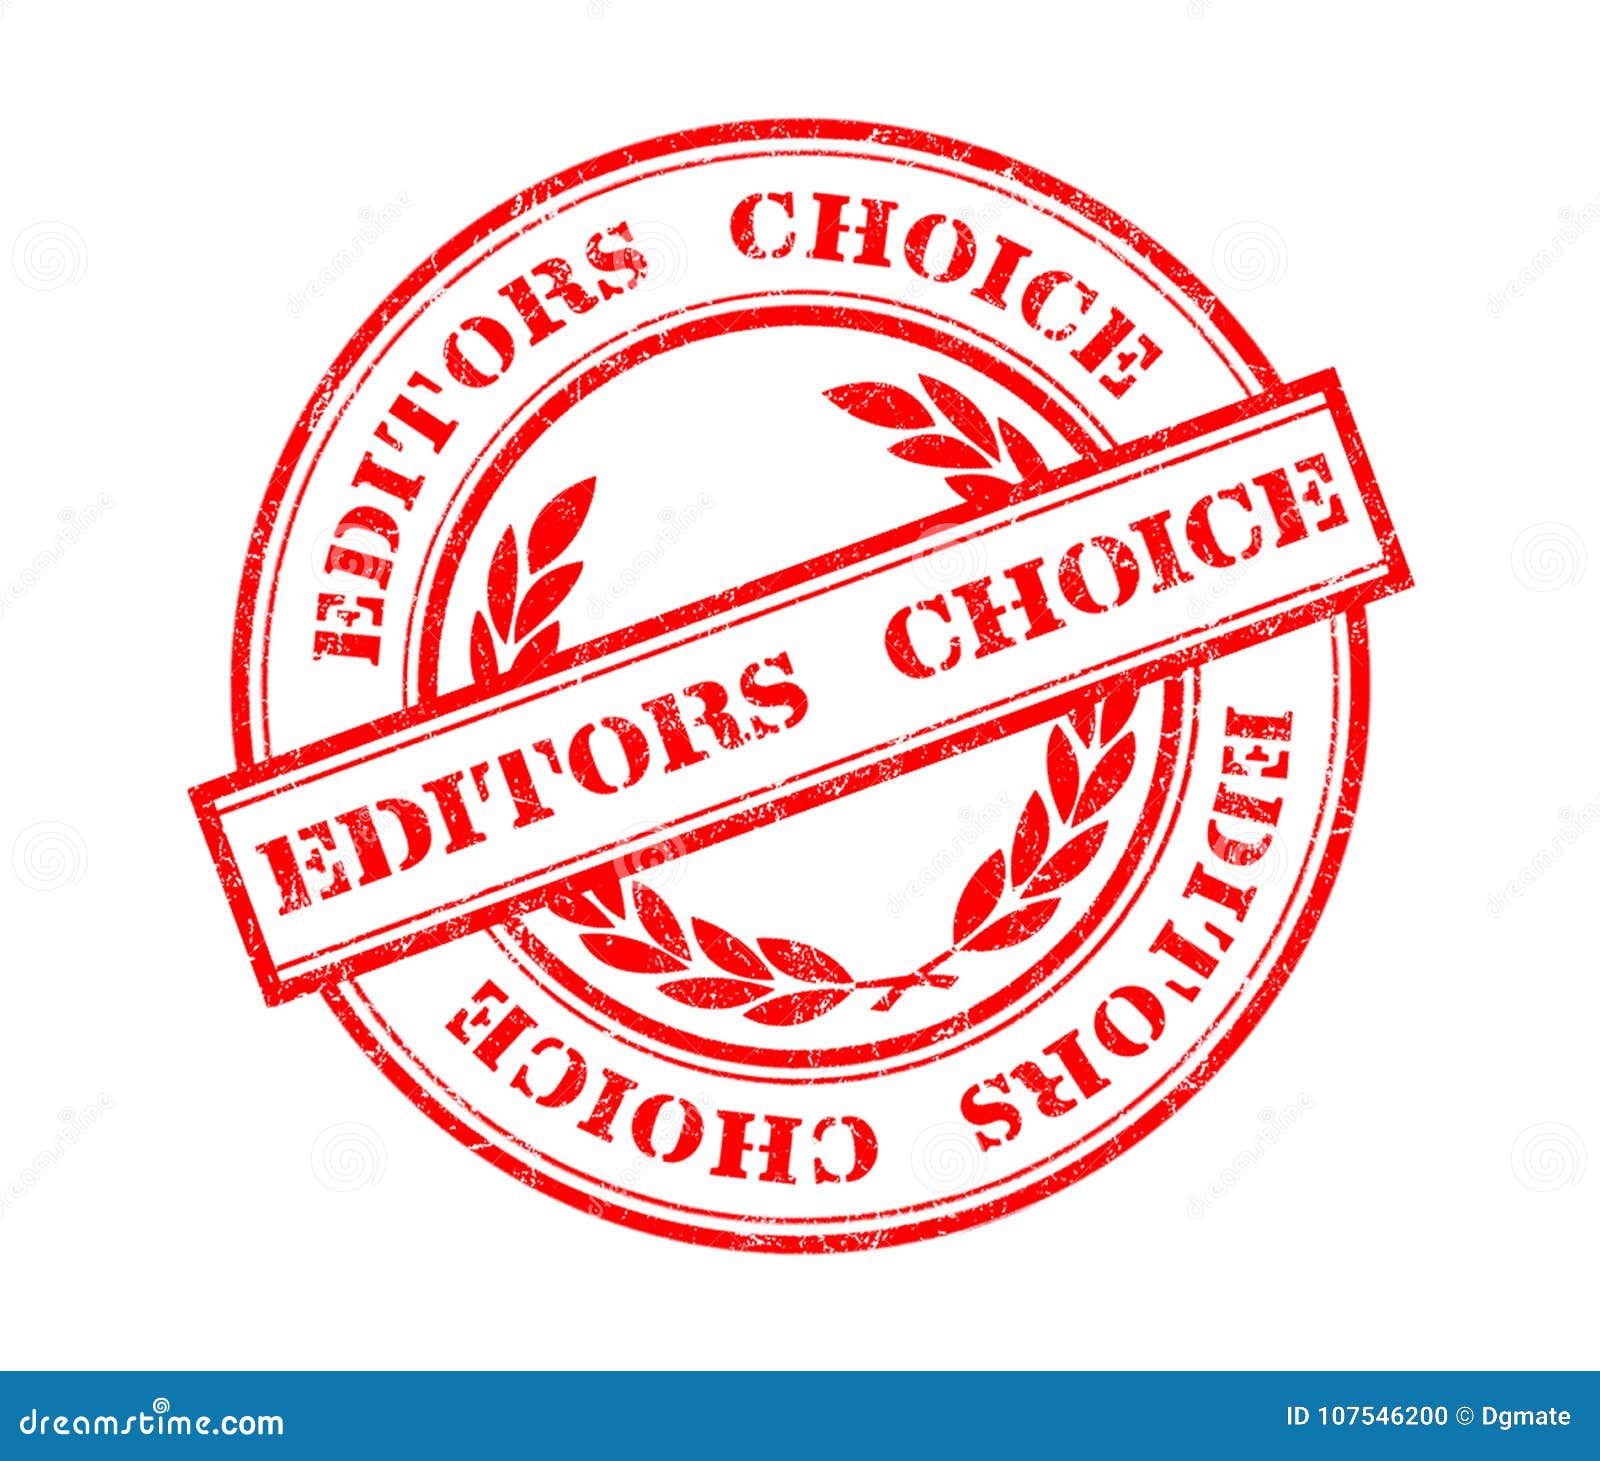 editors choice stamp